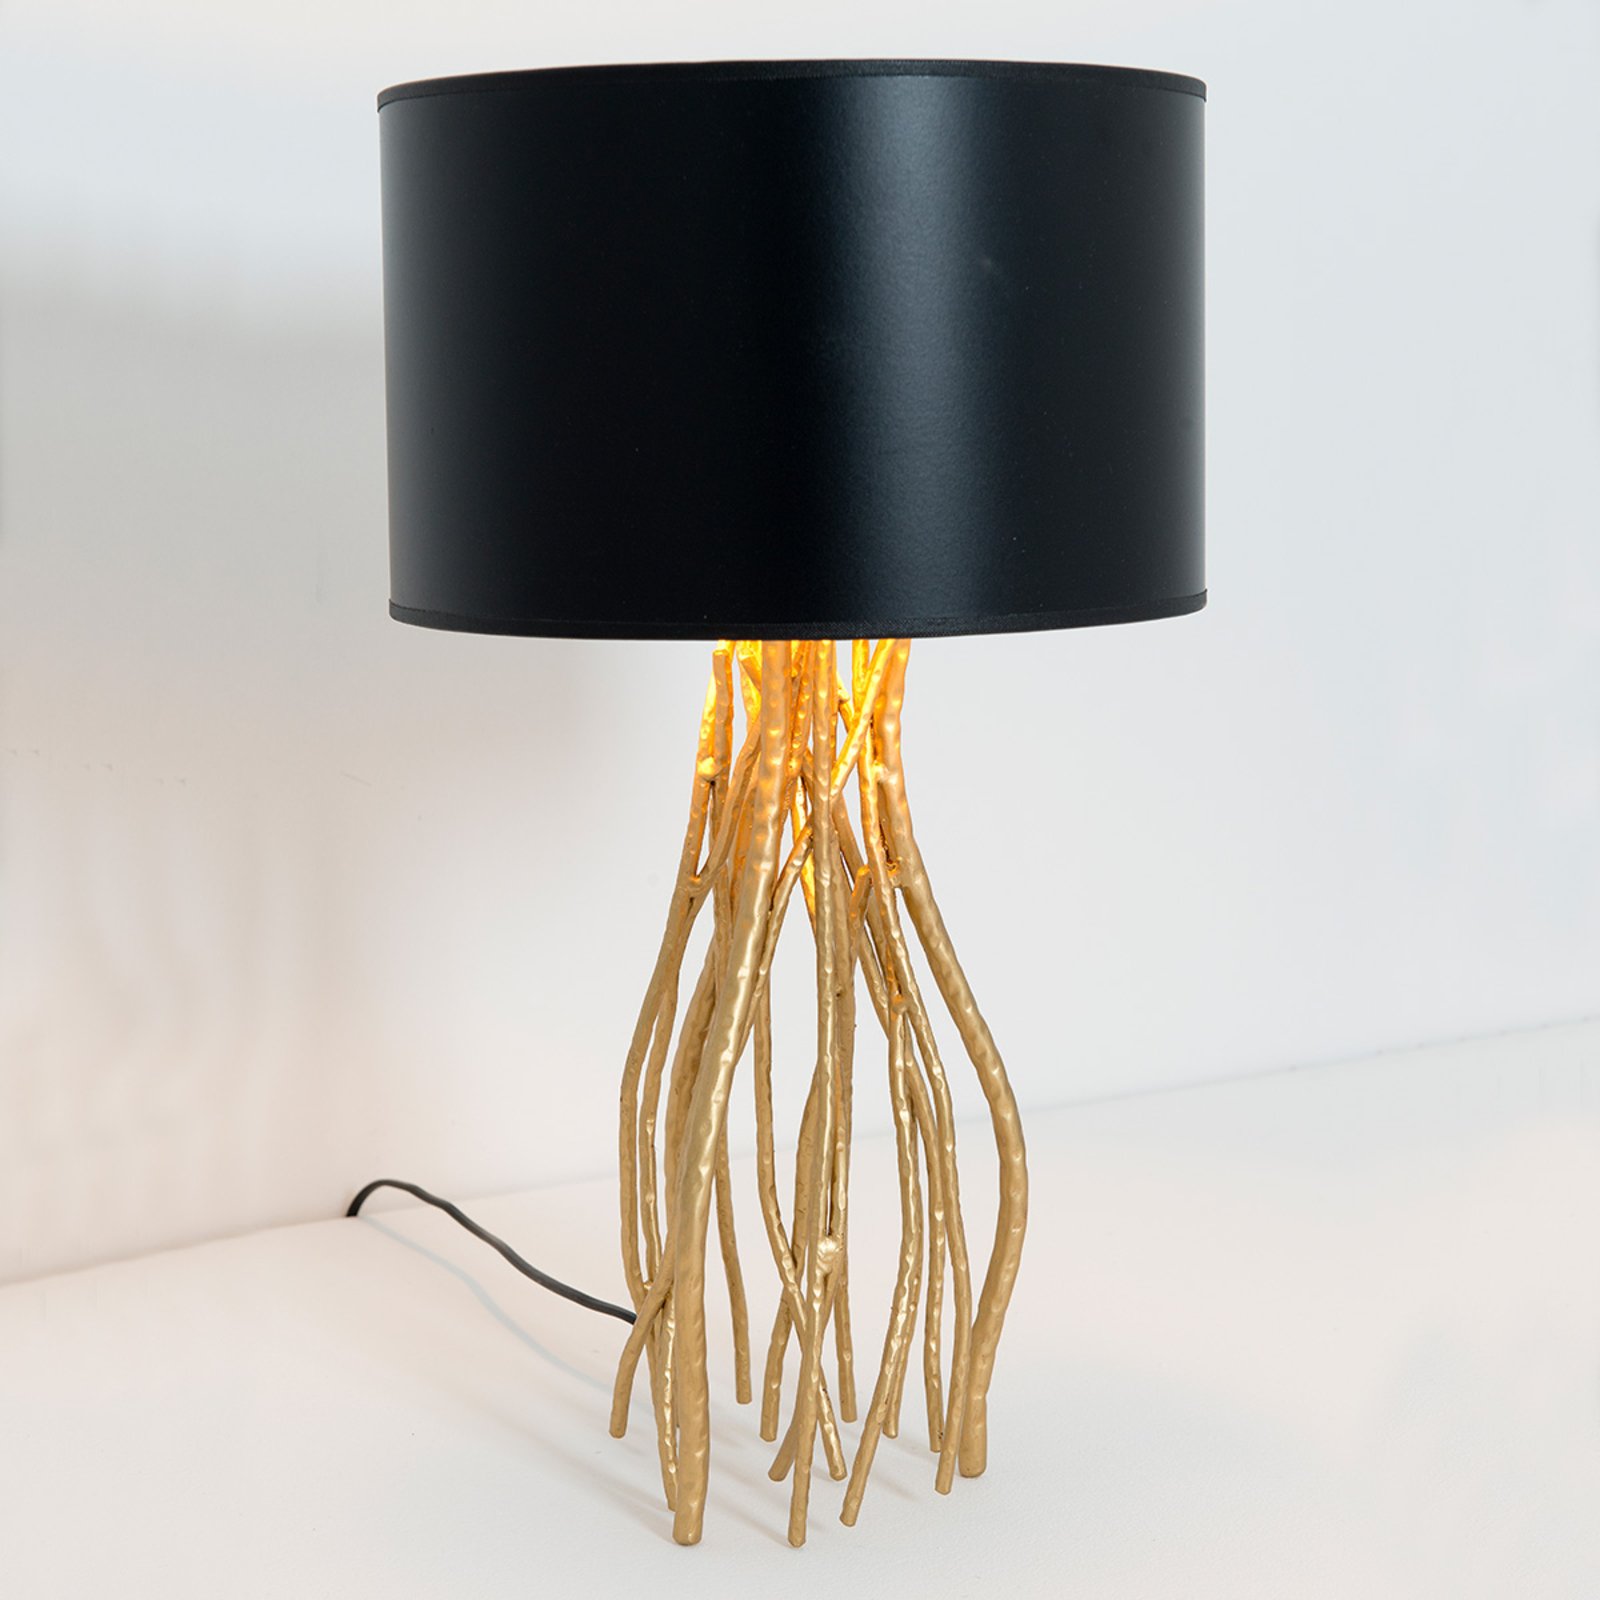 Black Capri table lamp, round, height 44 cm